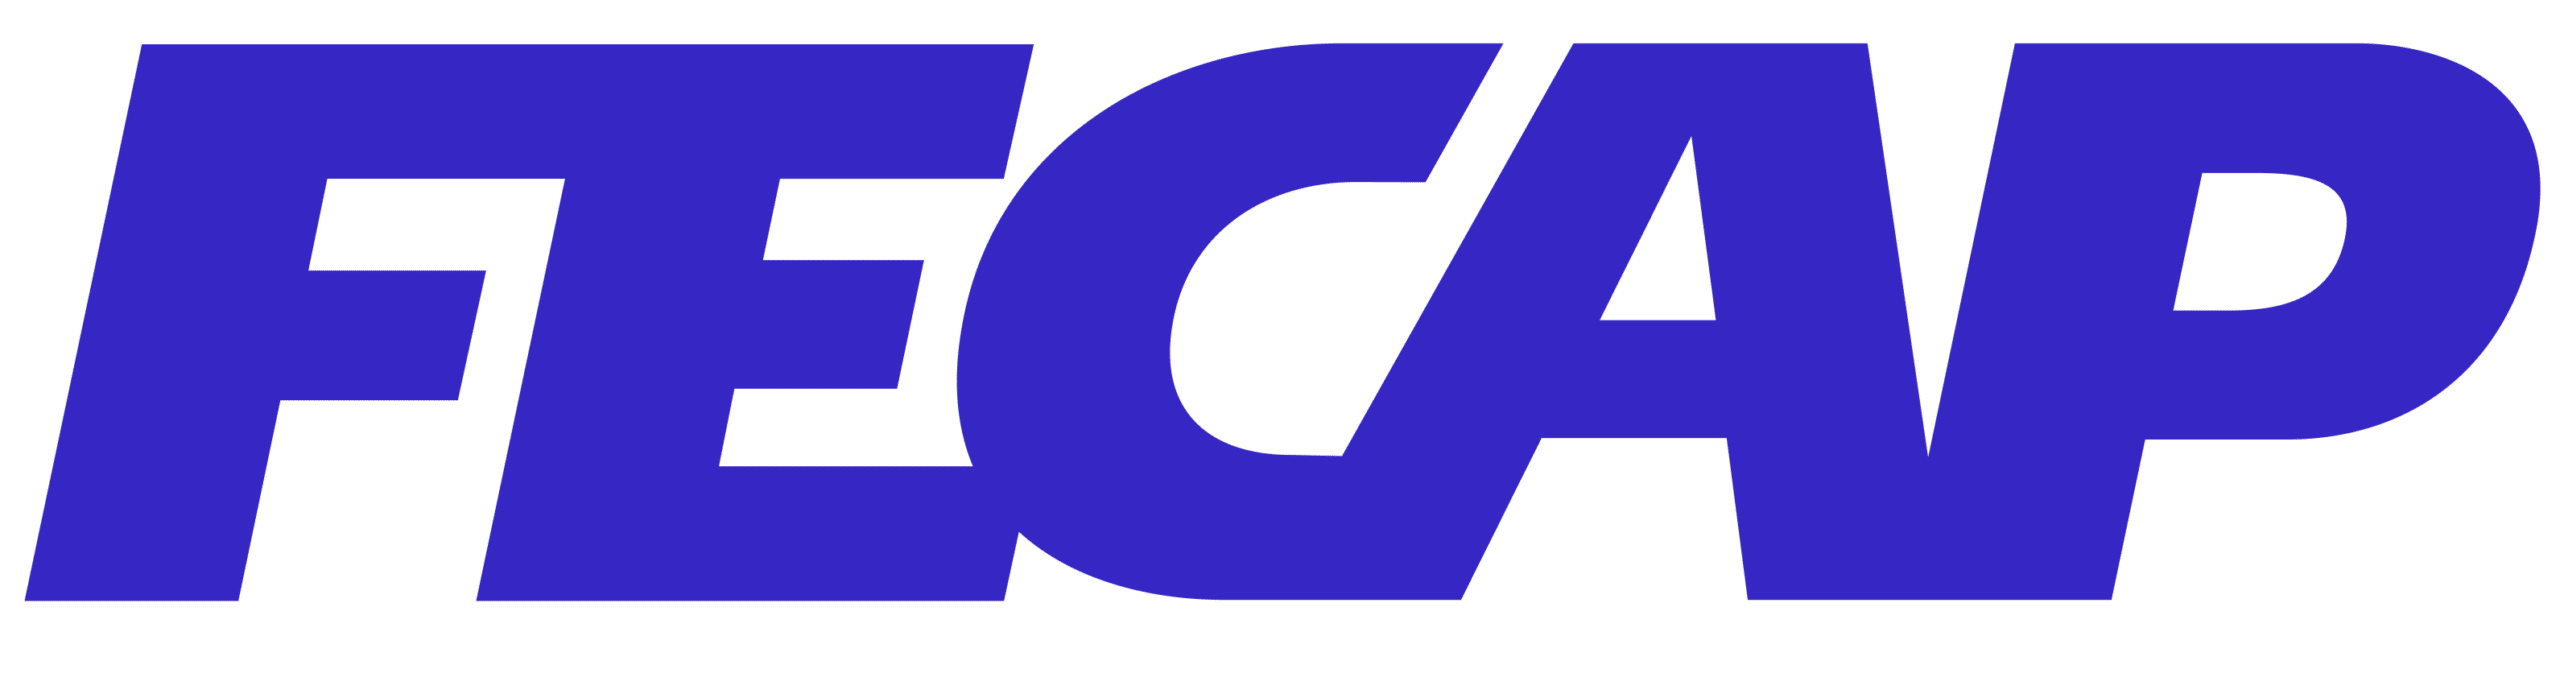 LogoAzul-FECAP